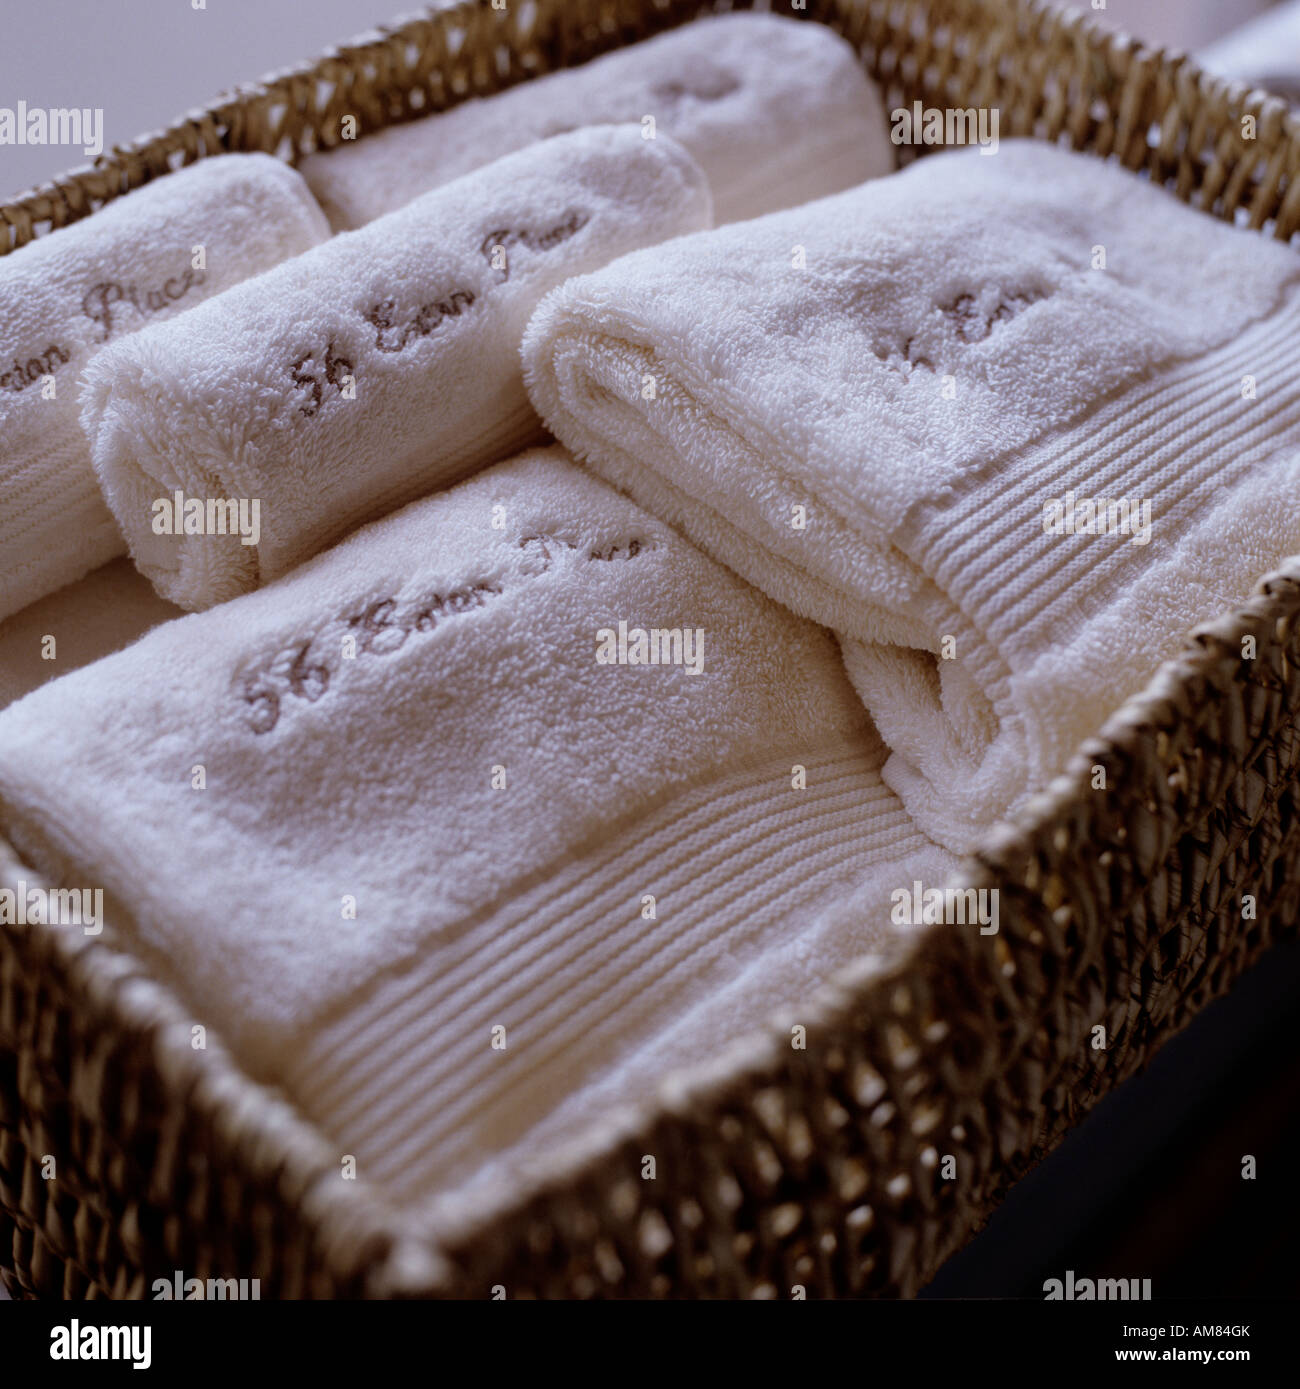 Folded white towels in a wicker basket Stock Photo